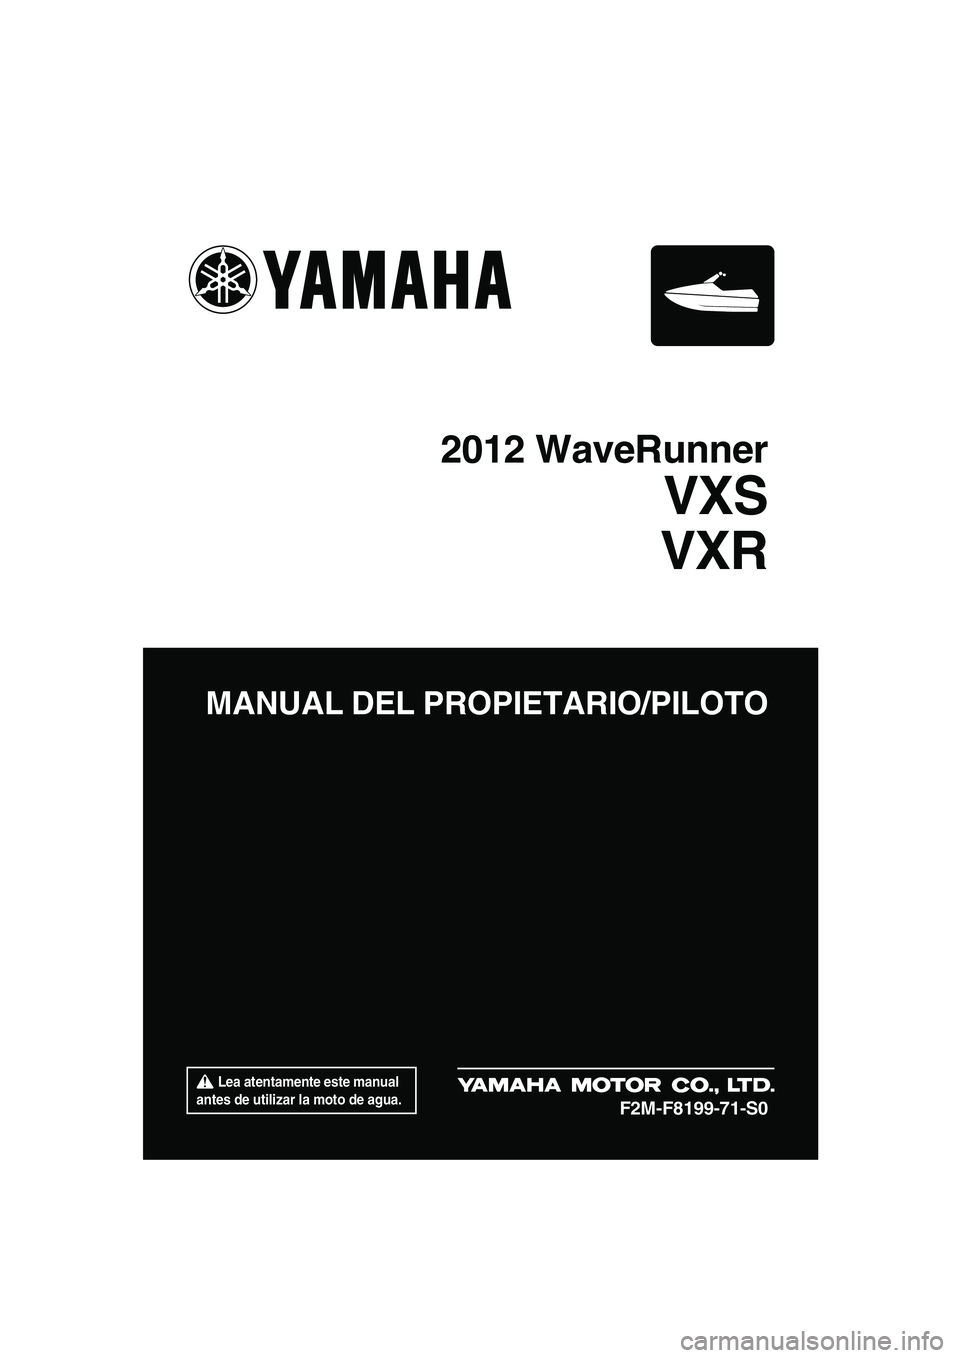 YAMAHA VXS 2012  Manuale de Empleo (in Spanish)  Lea atentamente este manual 
antes de utilizar la moto de agua.
MANUAL DEL PROPIETARIO/PILOTO
2012 WaveRunner
VXS
VXR
F2M-F8199-71-S0
UF2M71S0.book  Page 1  Monday, July 4, 2011  10:44 AM 